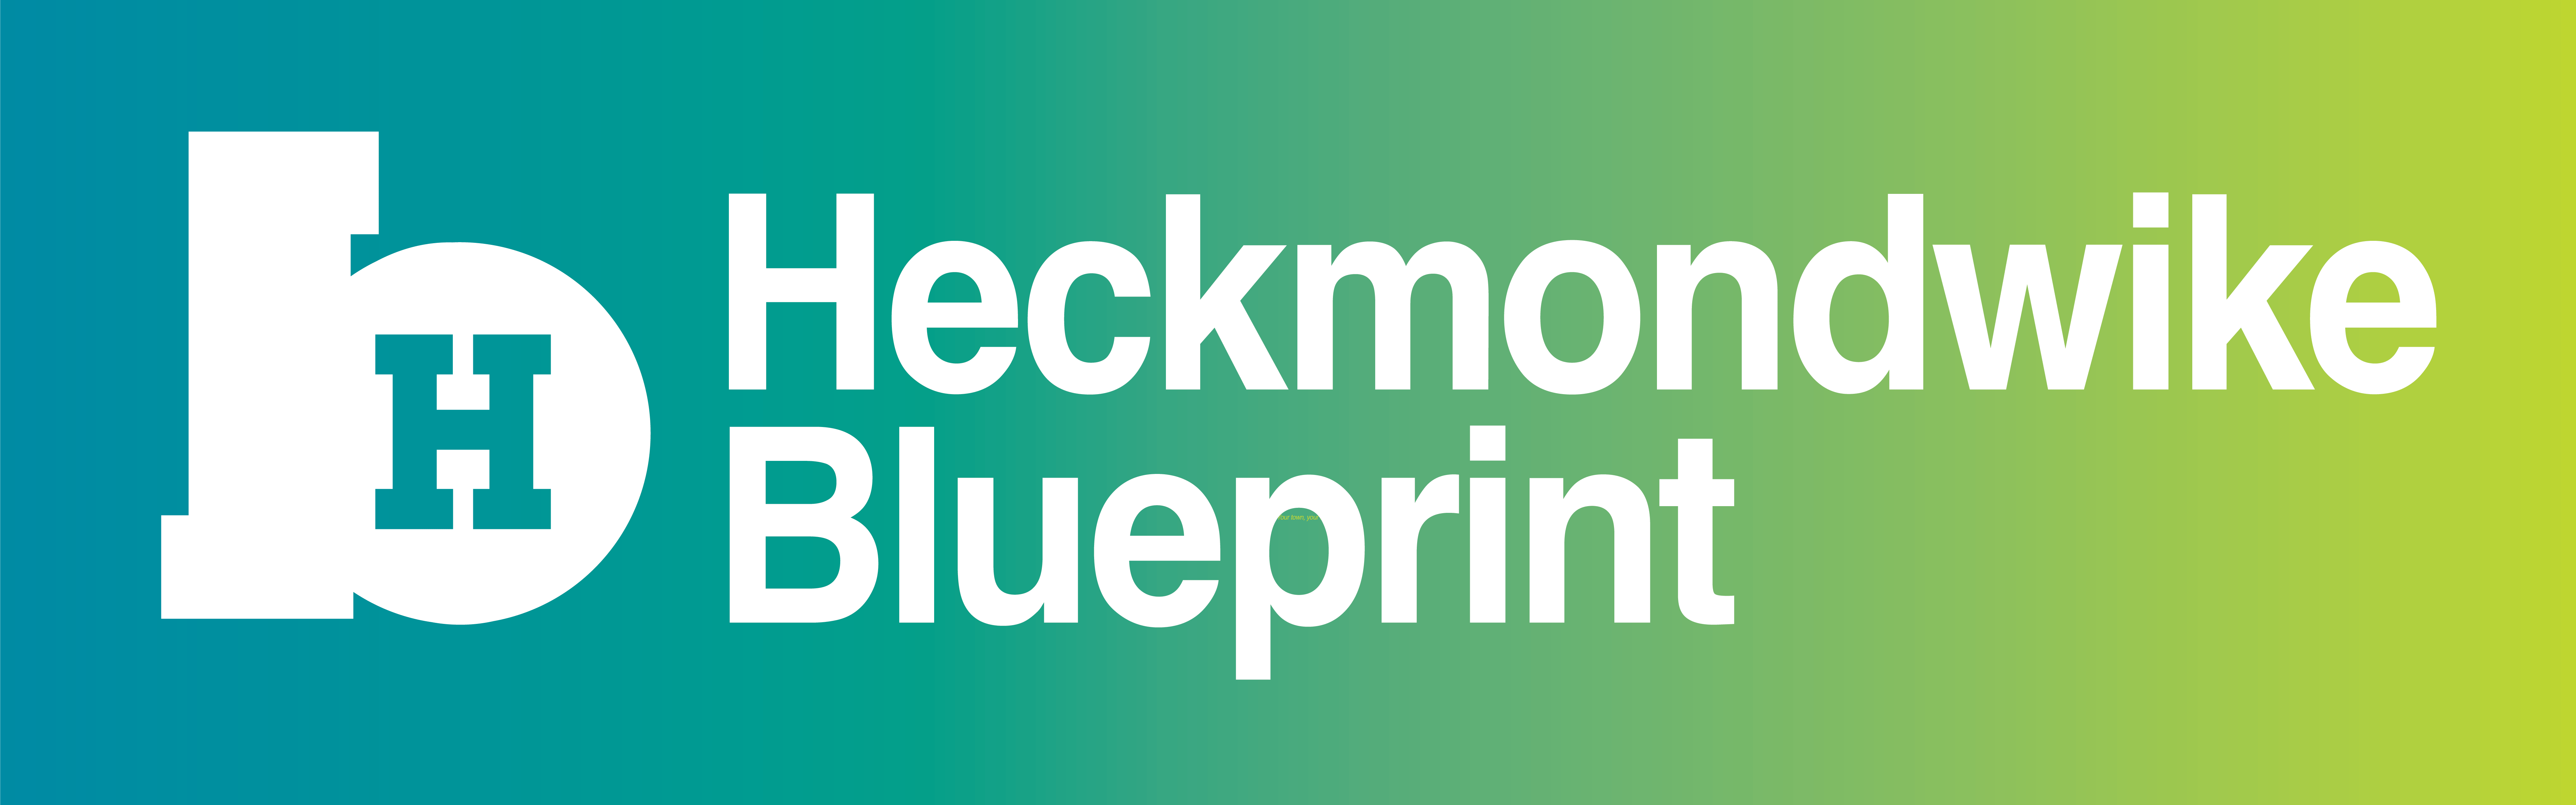 Heckmondwike Blueprint Banner